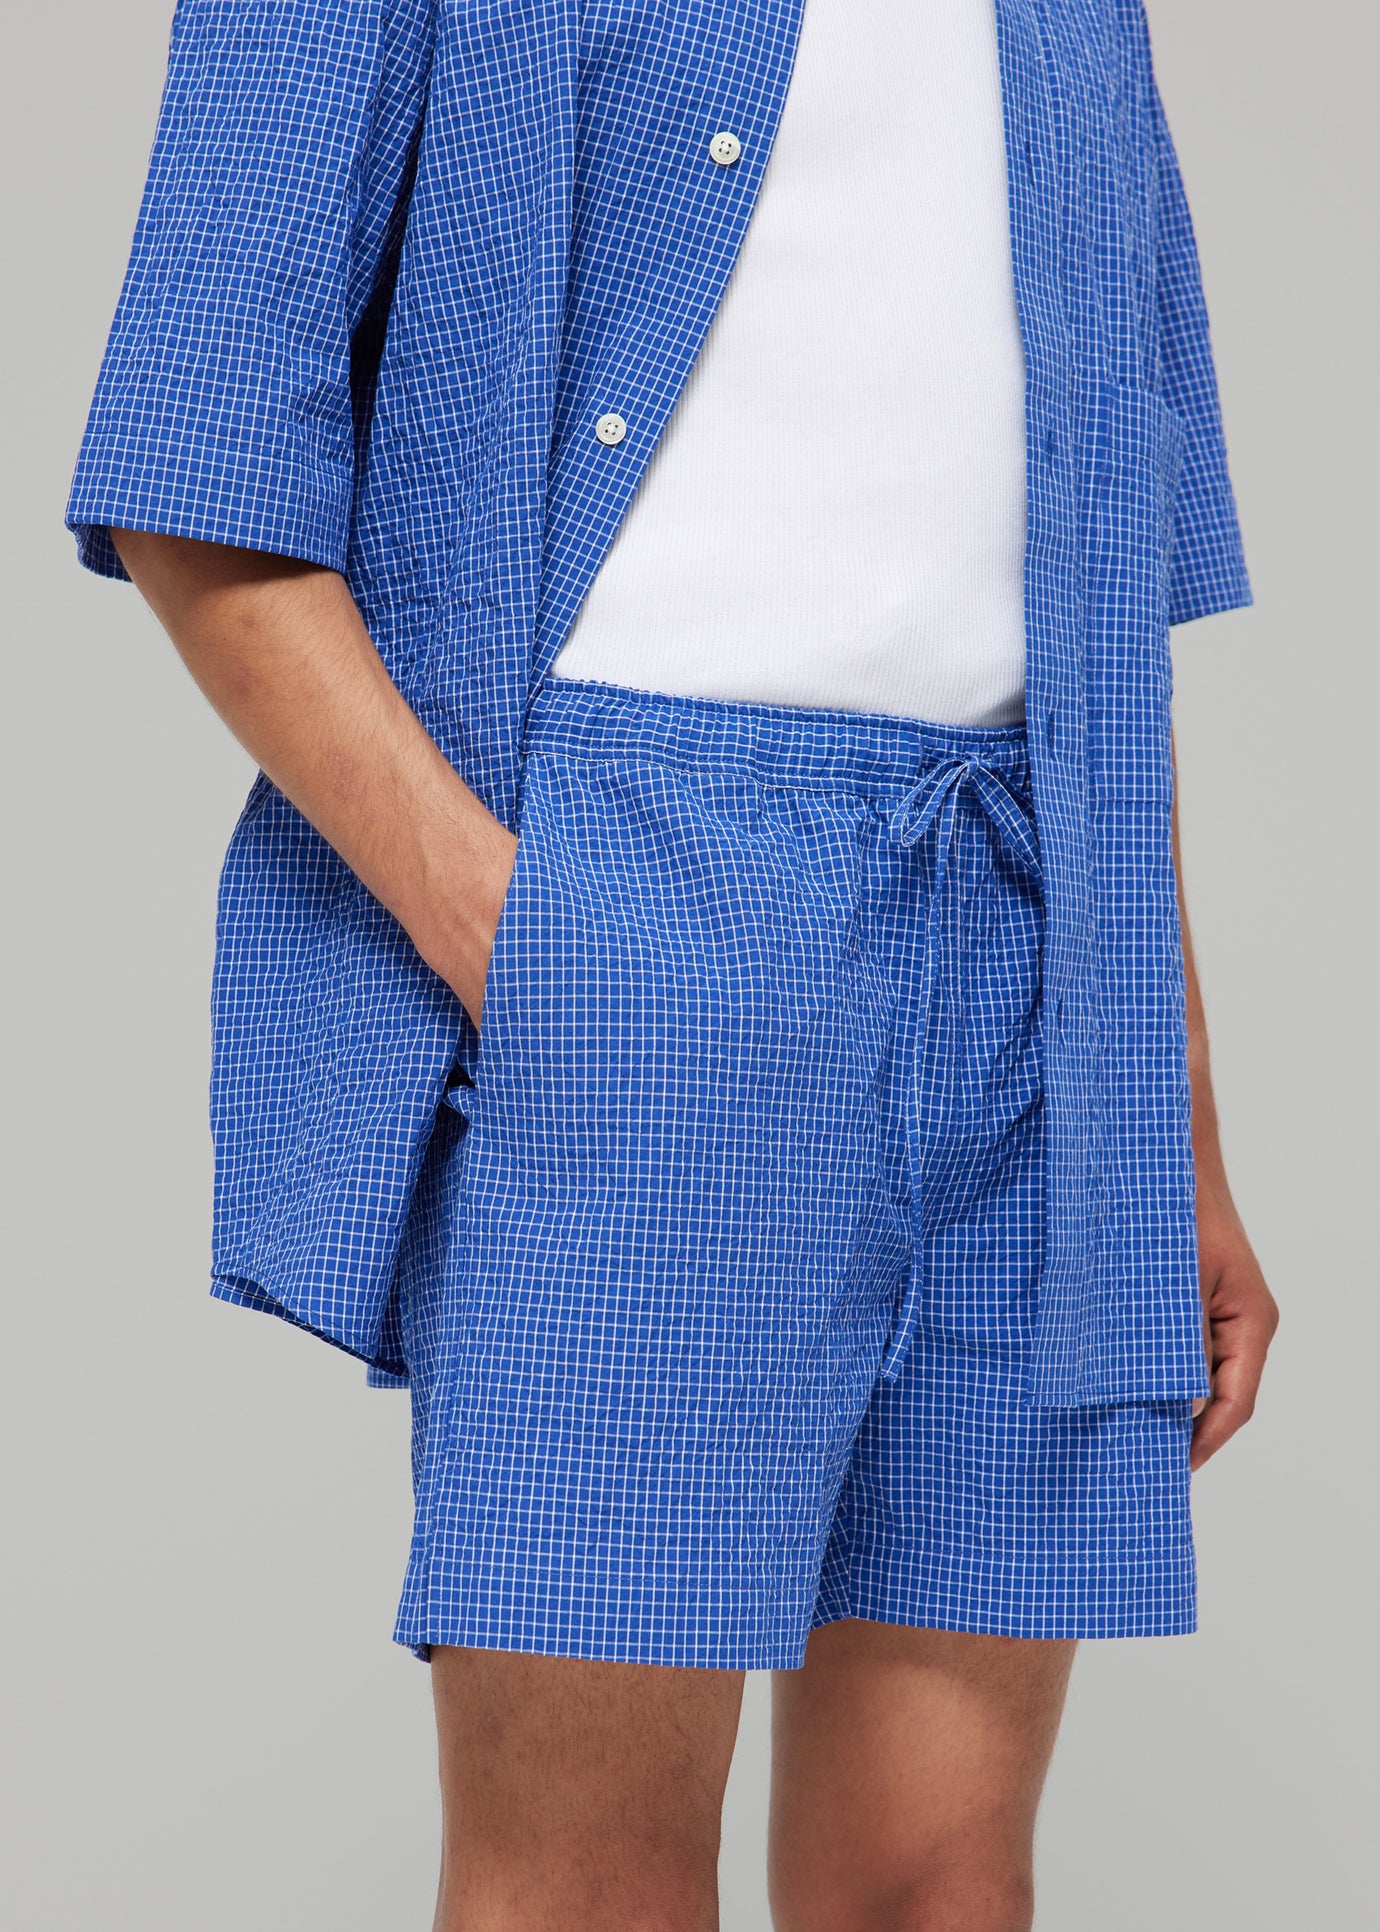 Róhe Checkered Shorts - Ultramarine White Check - 1